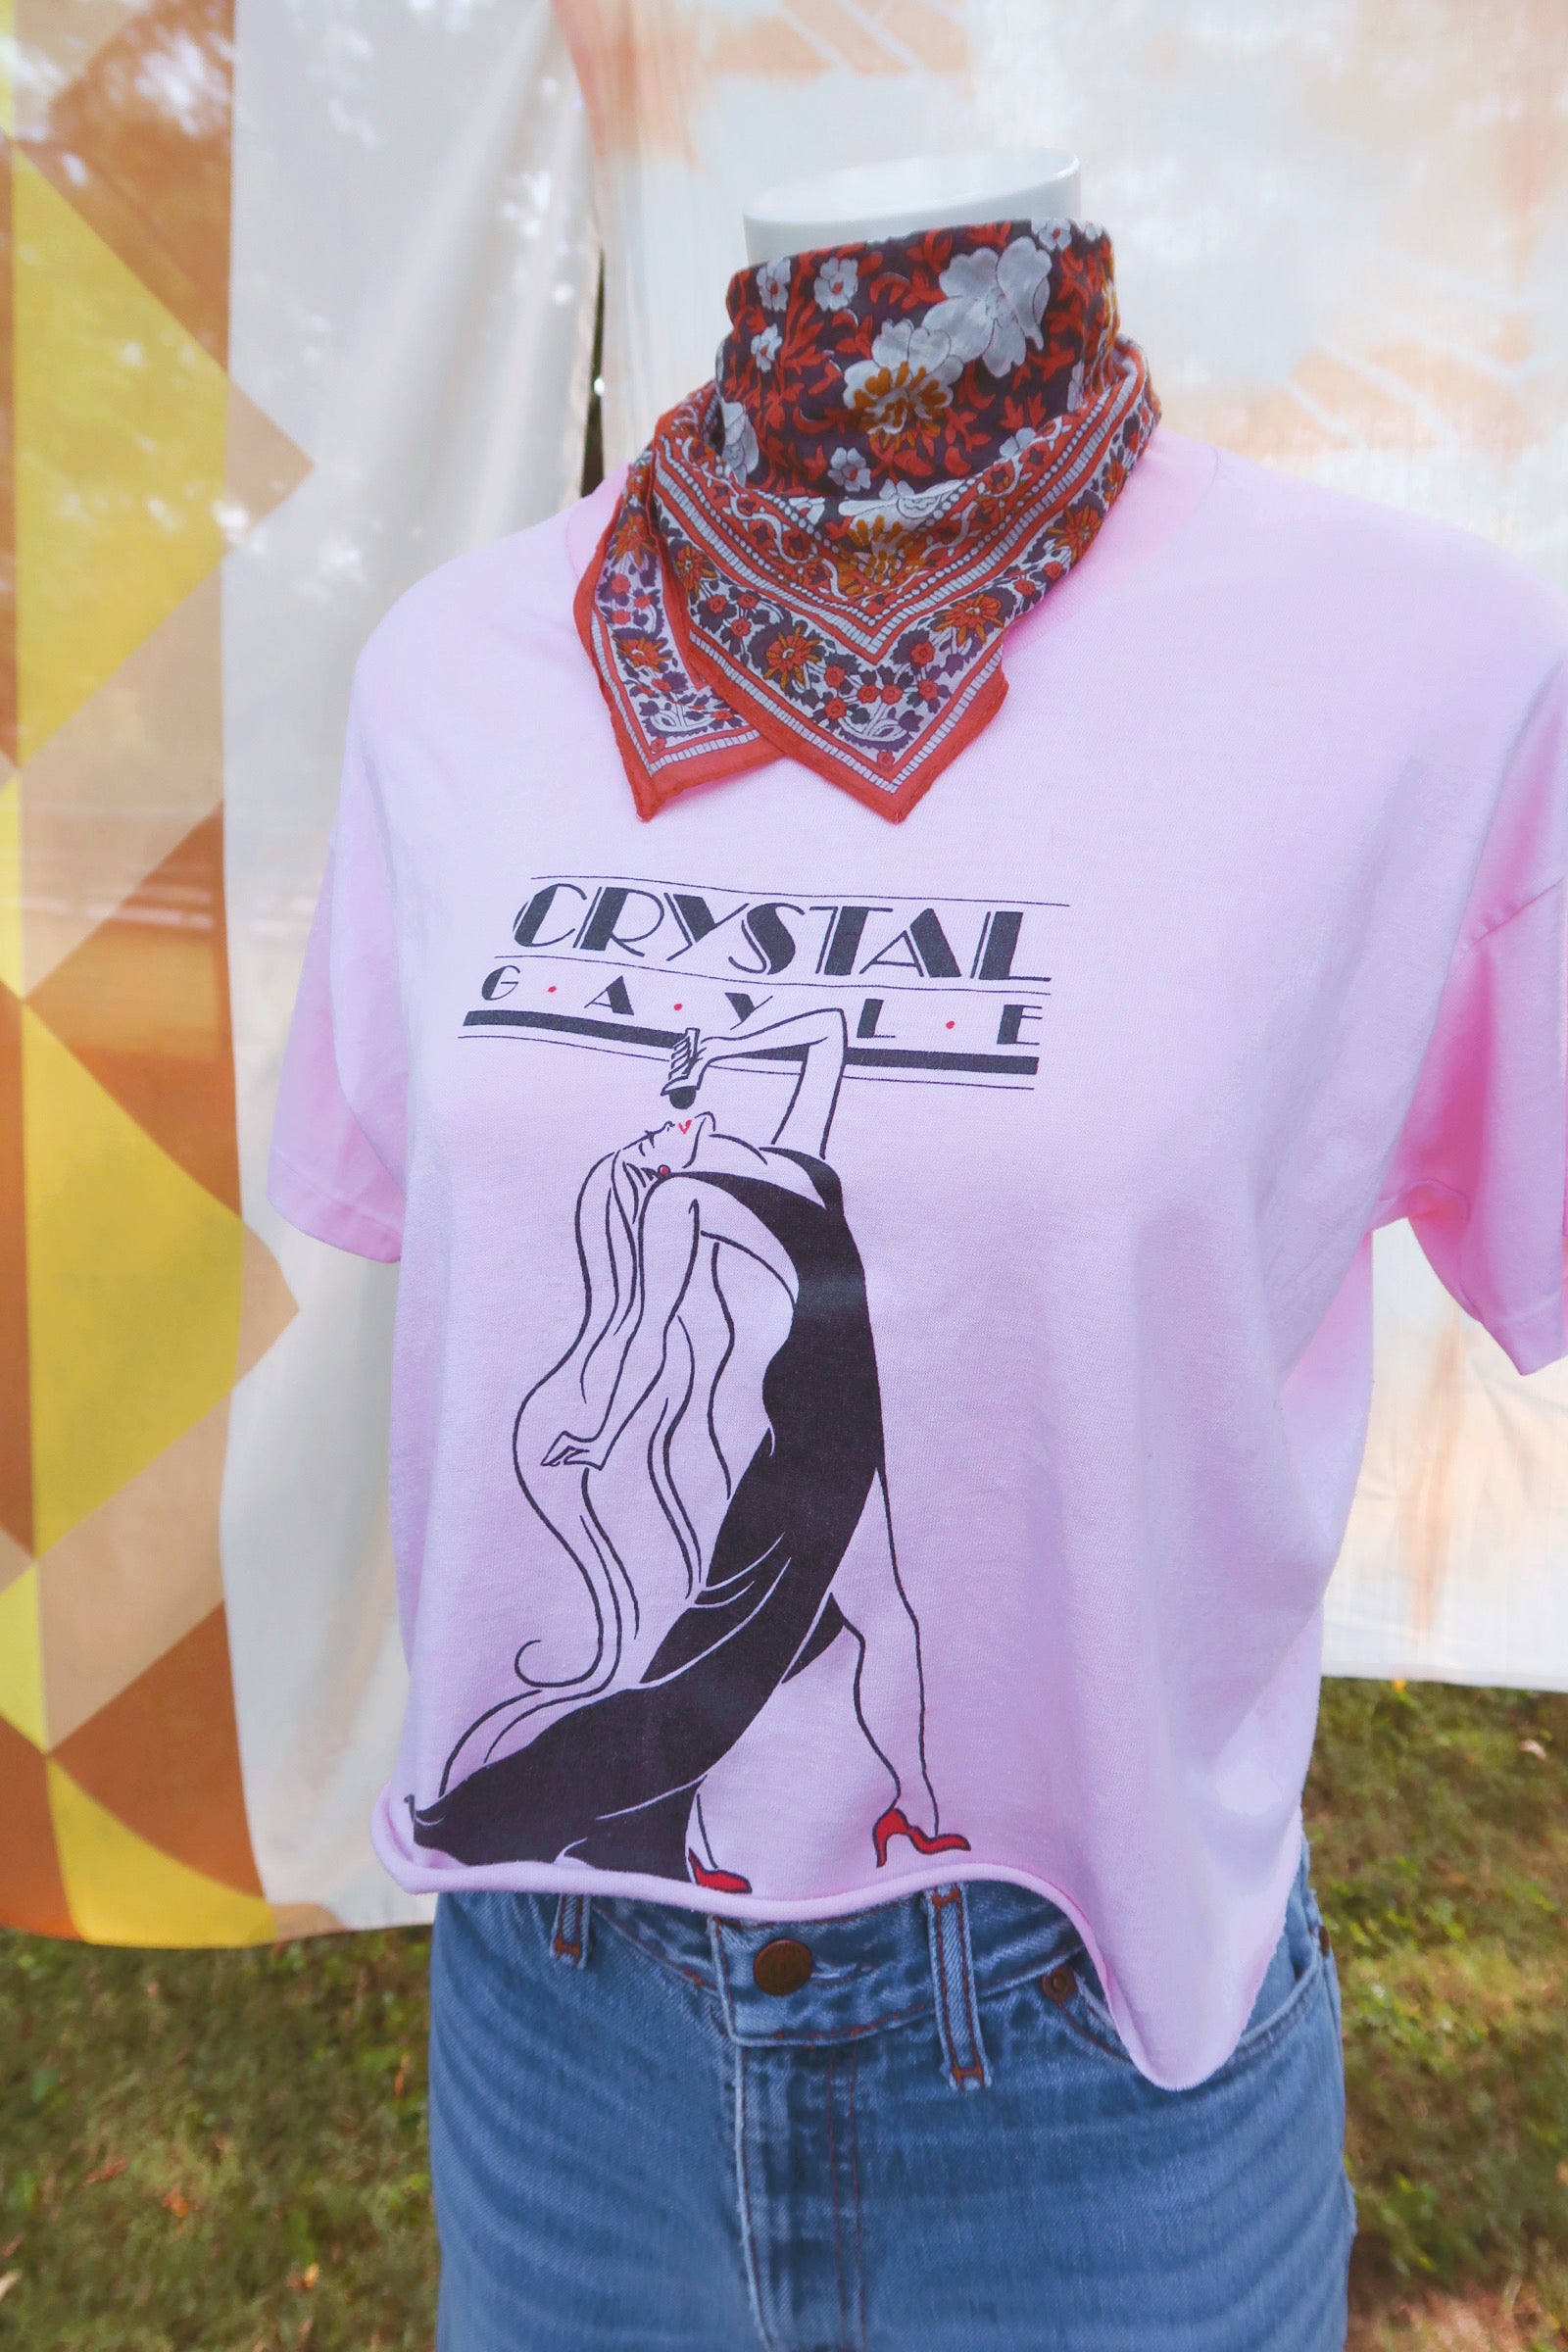 1980's Crystal Gayle t-shirt